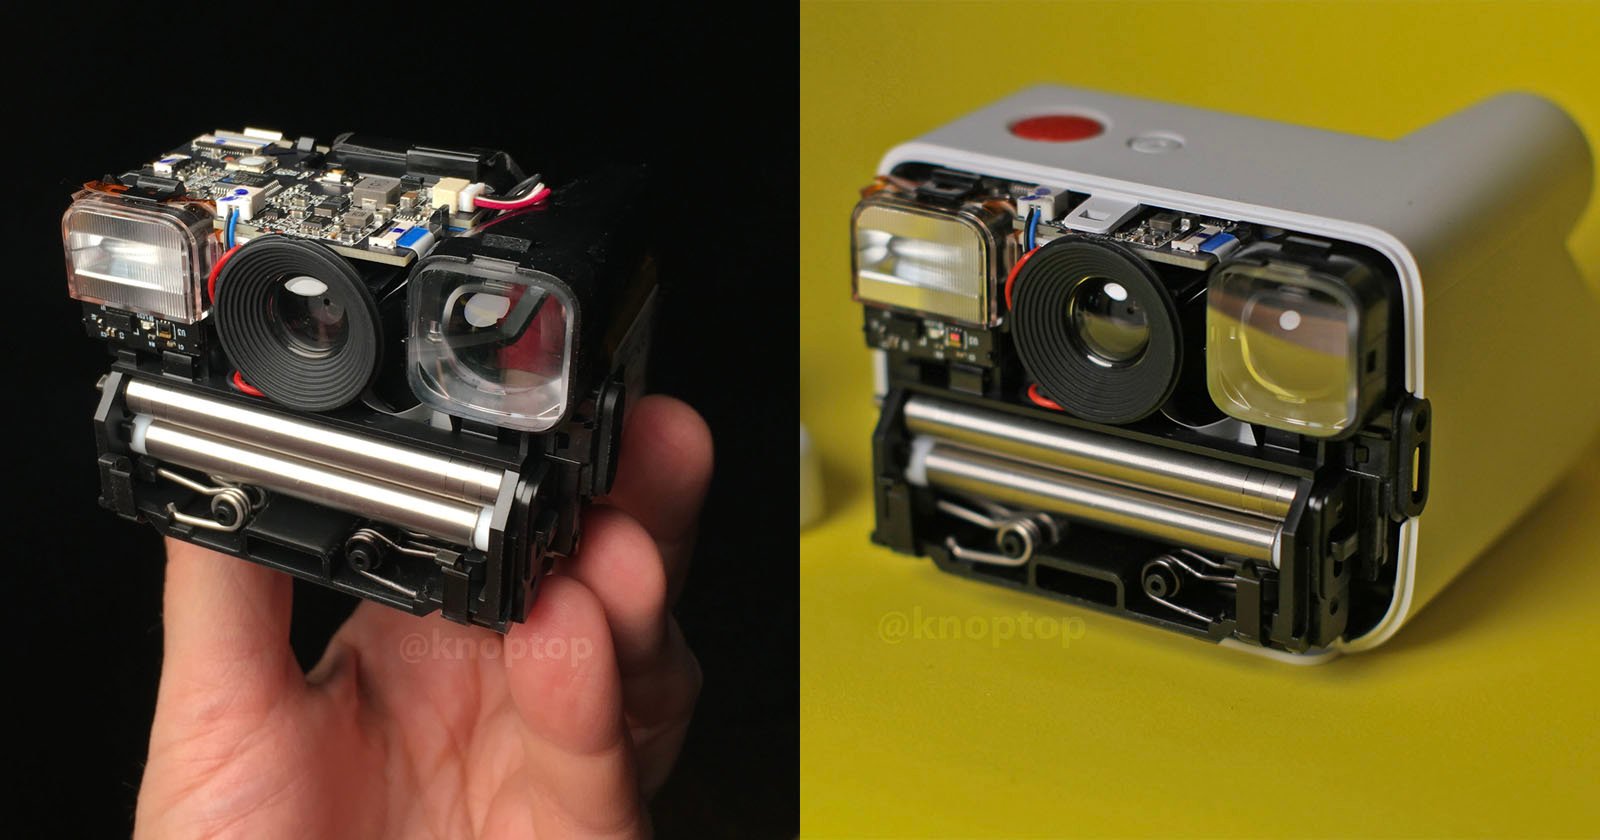 Polaroid Go Instant Camera Teardown: Inside the Tiny Film Camera